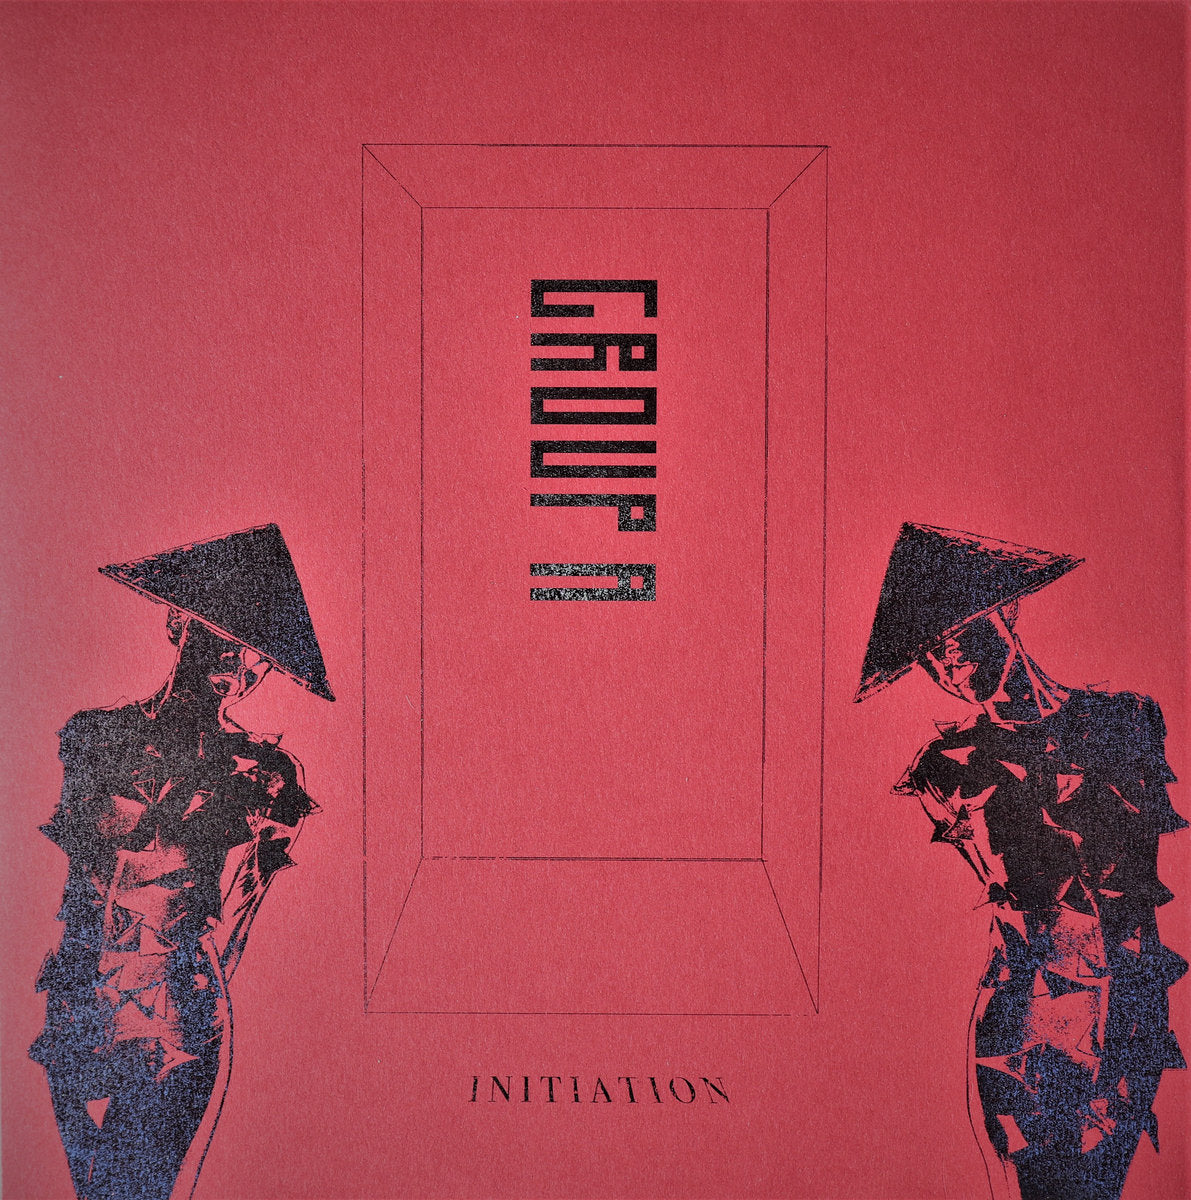 GROUP A - "INITIATION" LP